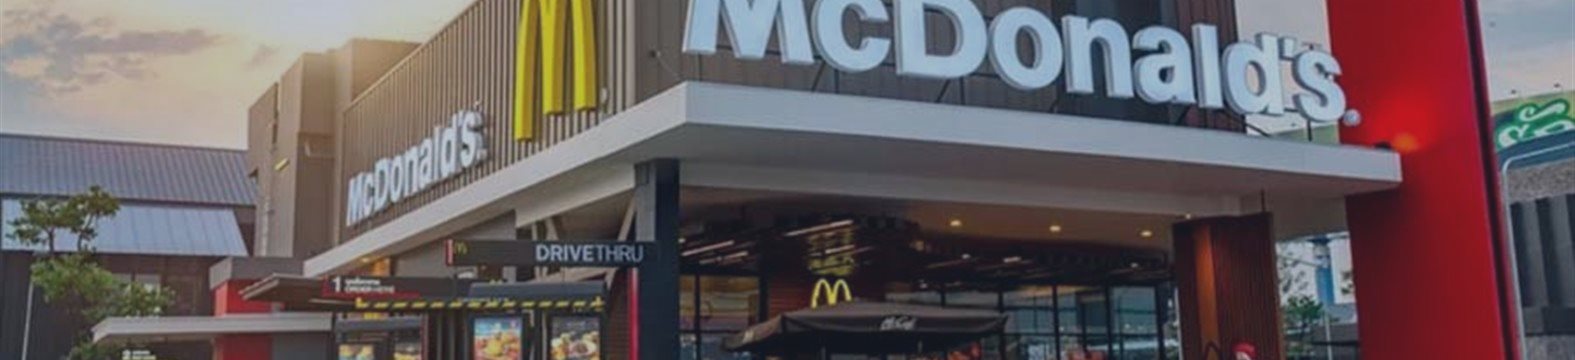 McDonald’s – прогноз позитивный, но в расчёте на год